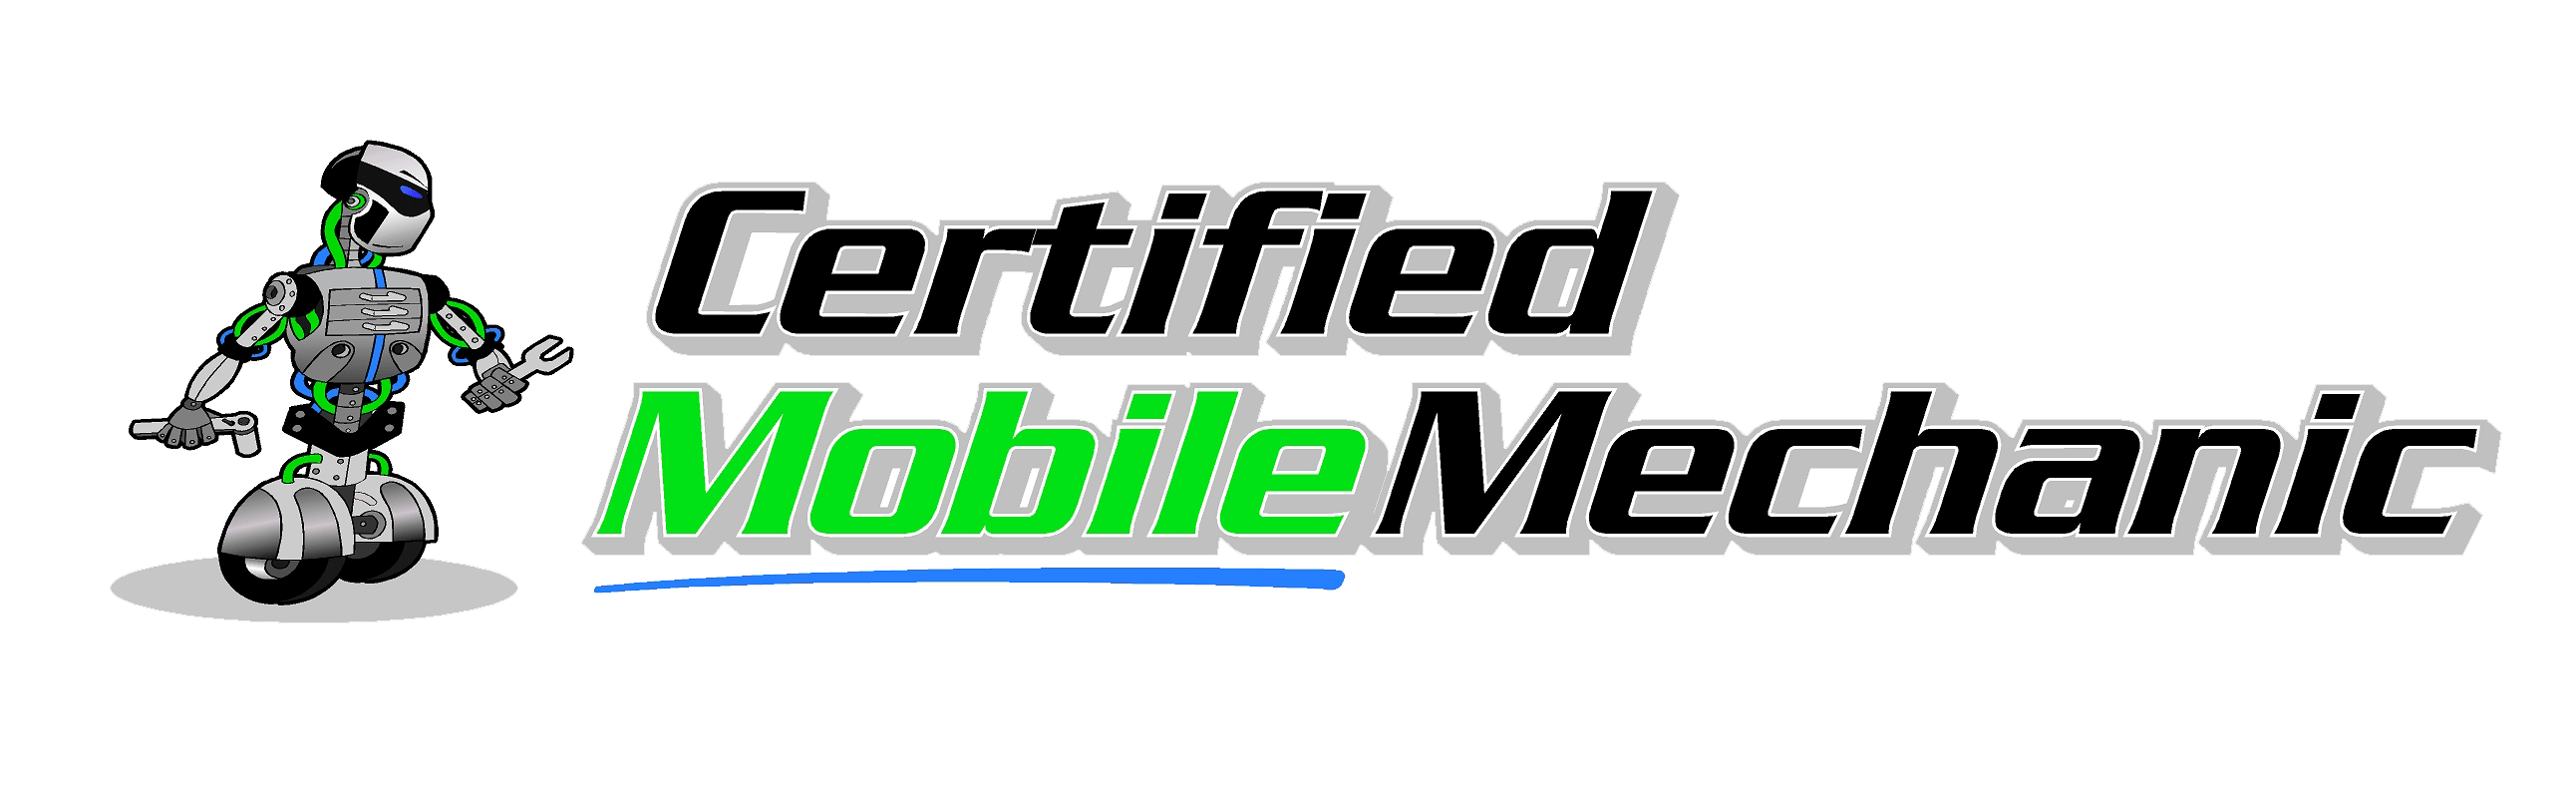 Mobile Mechanic Logo - The Certified Mobile Mechanic